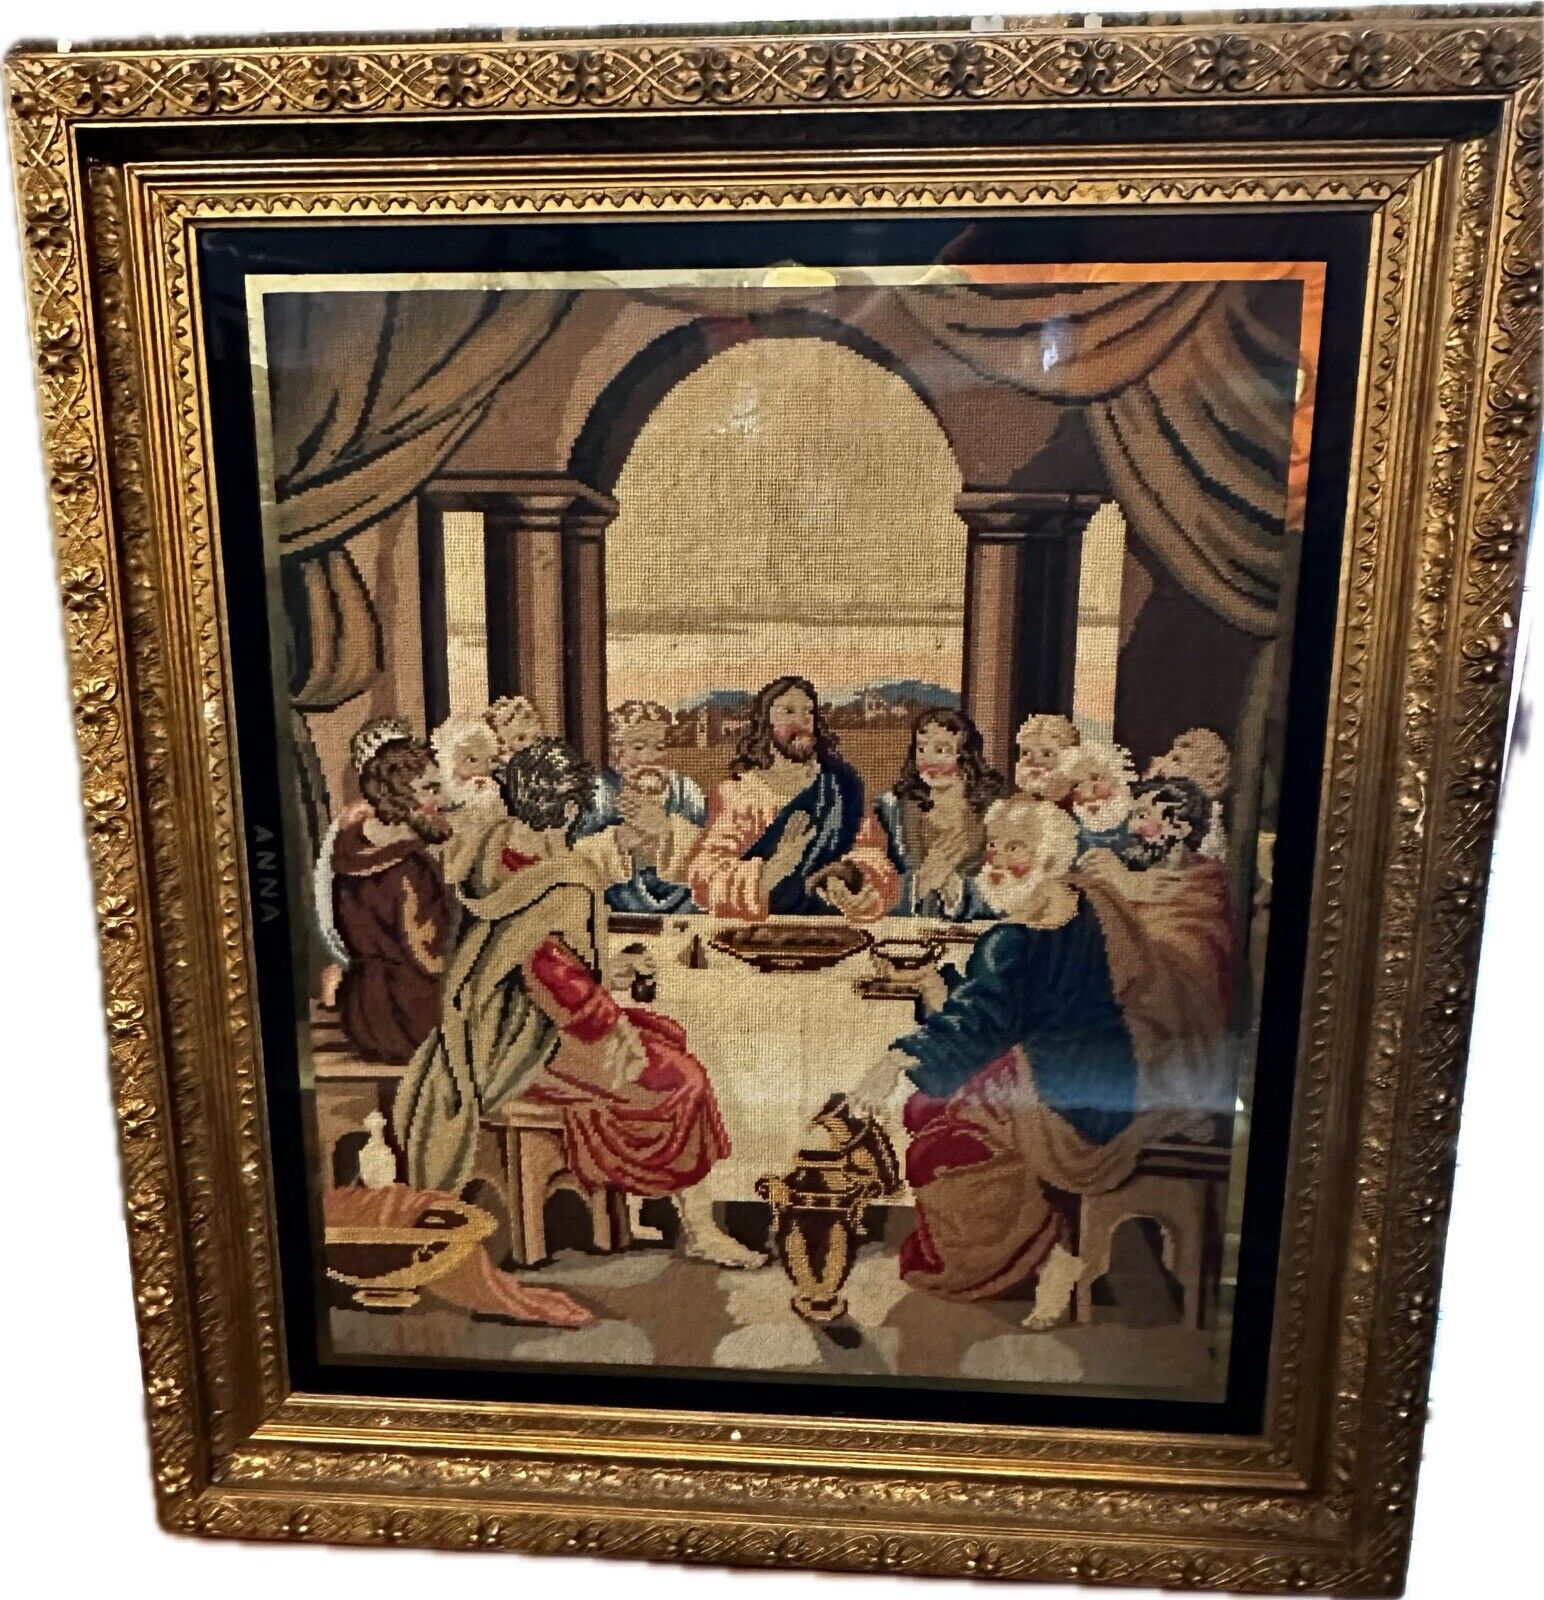 Holy Last Supper Needlepoint Canvas Ornate Gold Frame Vtg Exquisite Large Unique